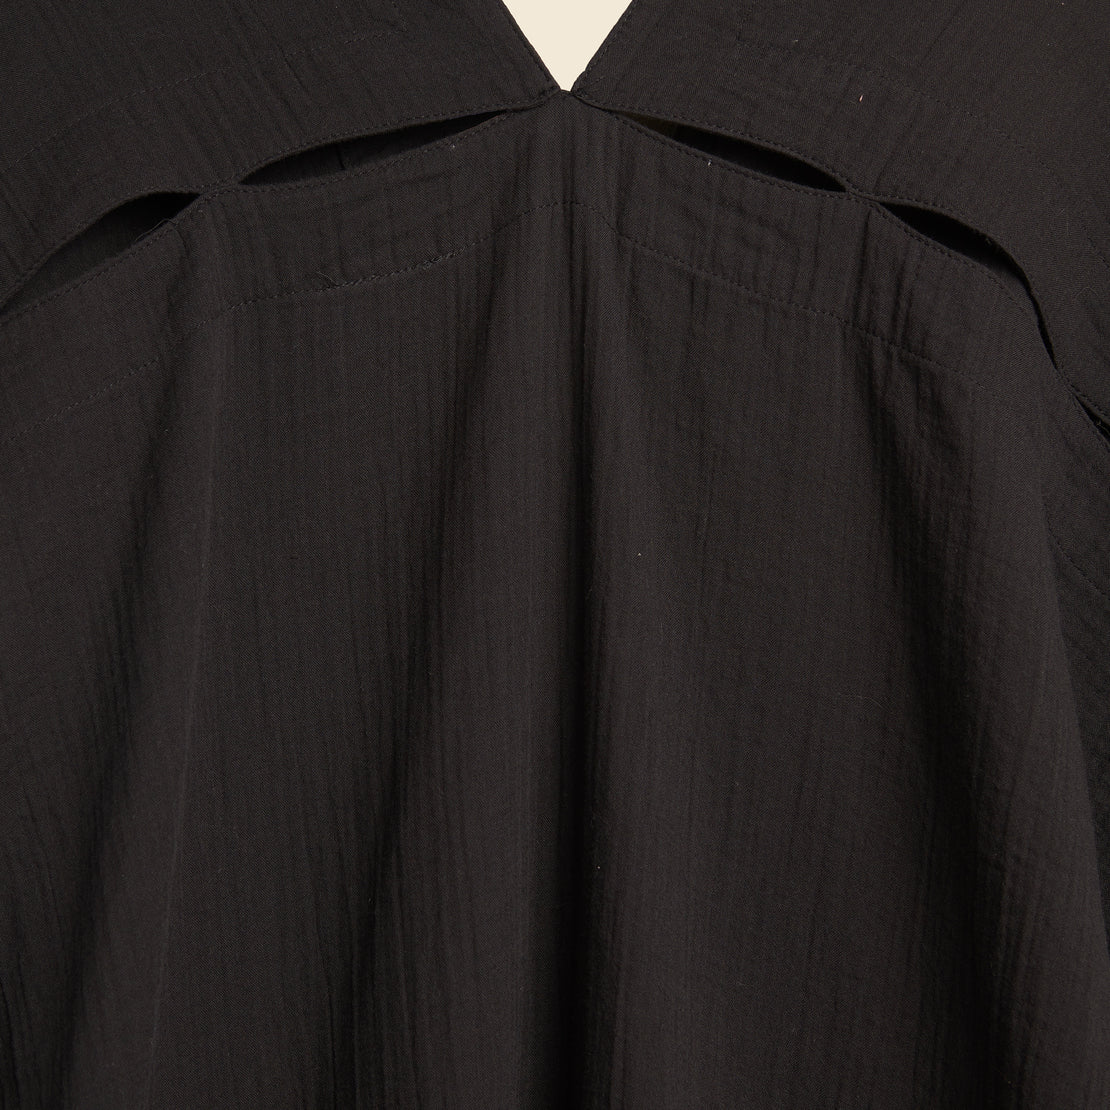 Crescent Dress -  Black - Atelier Delphine - STAG Provisions - W - Onepiece - Dress